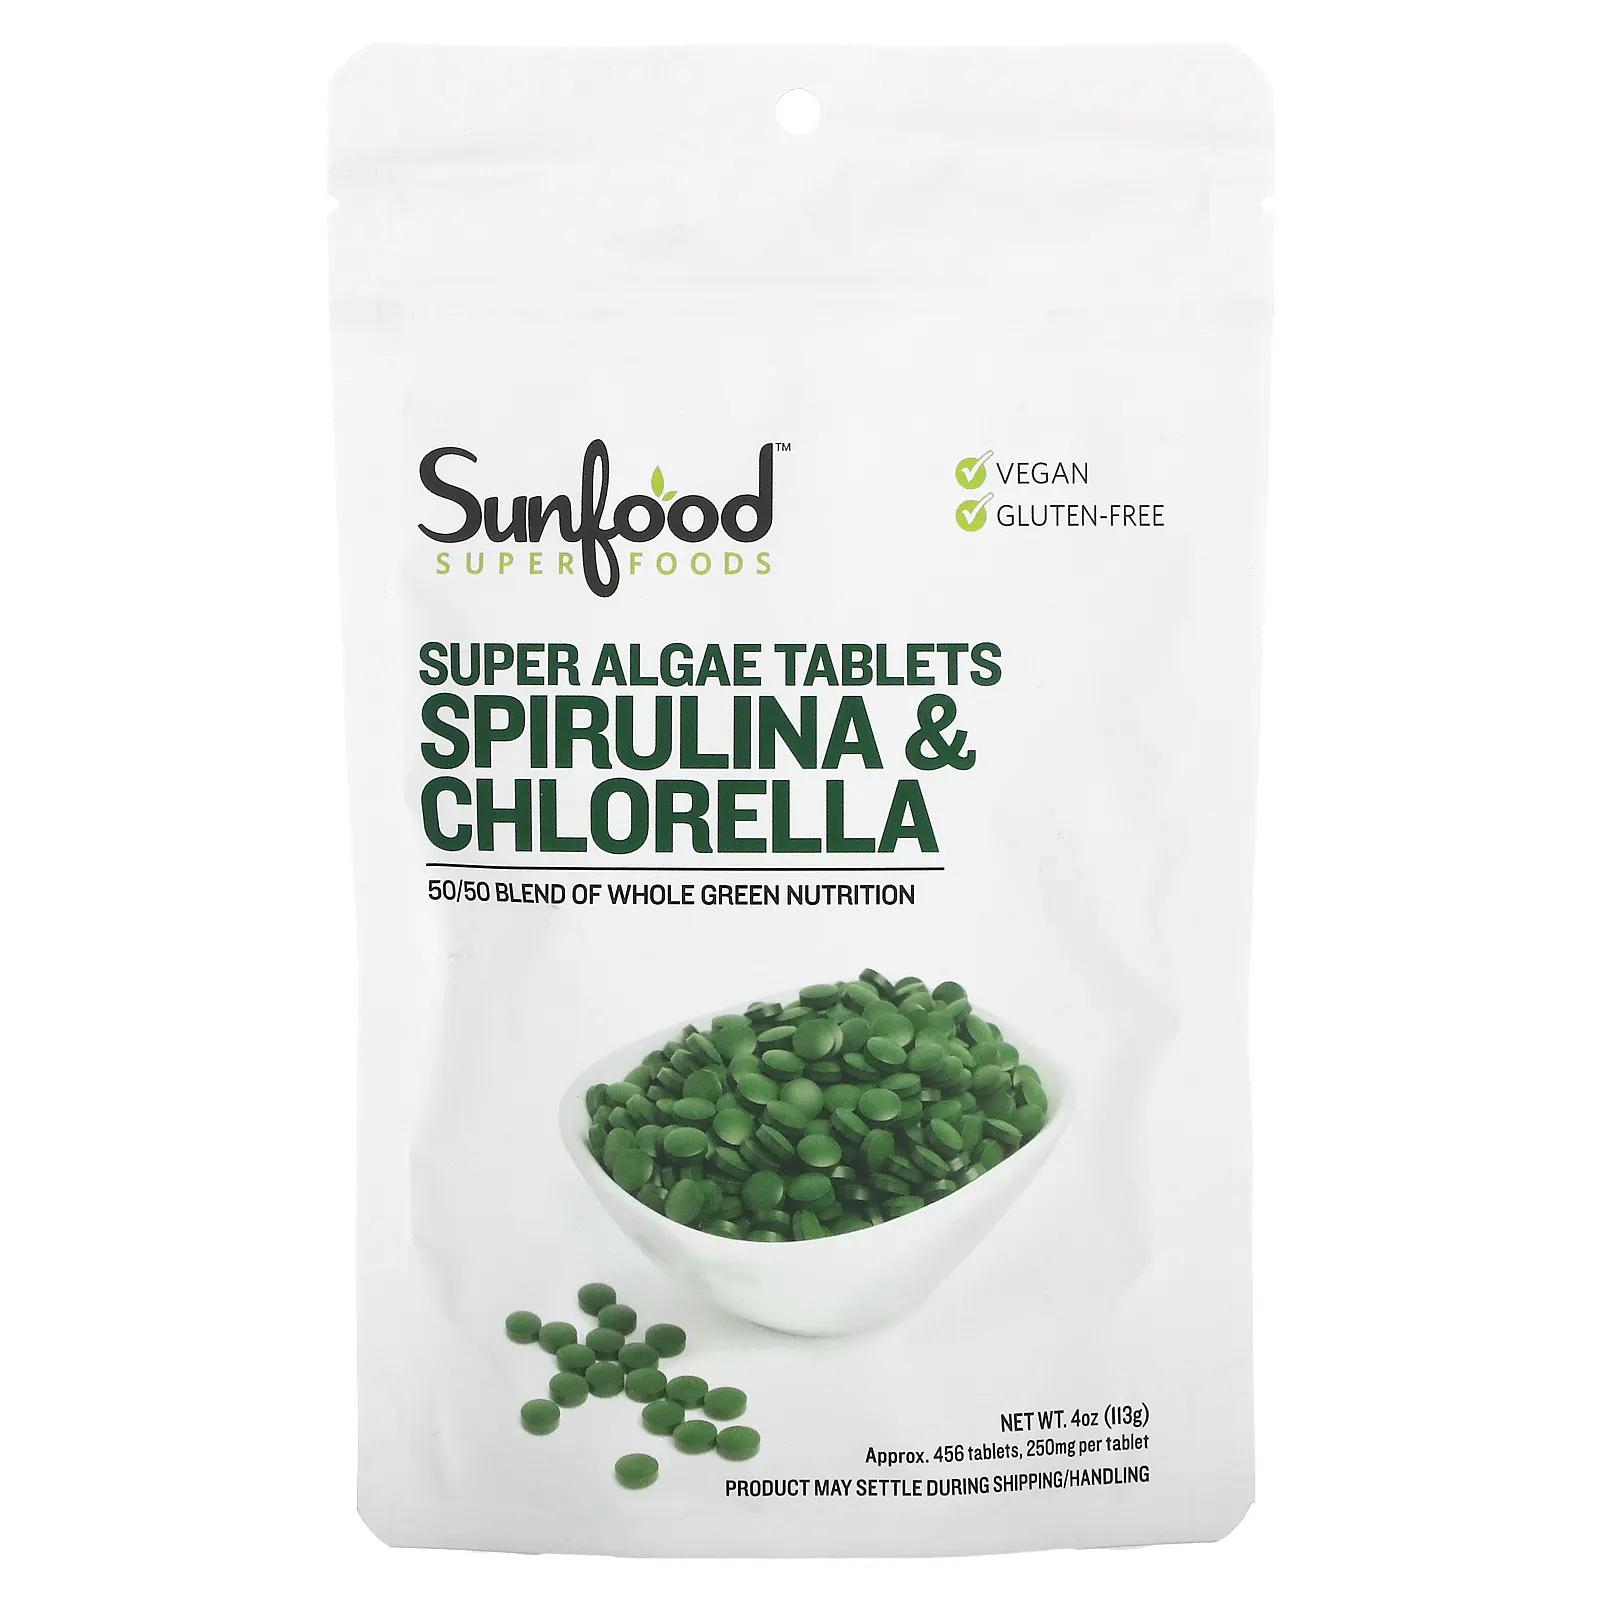 Sunfood спирулина и хлорелла таблетки с суперводорослями 250 мг 456 таблеток